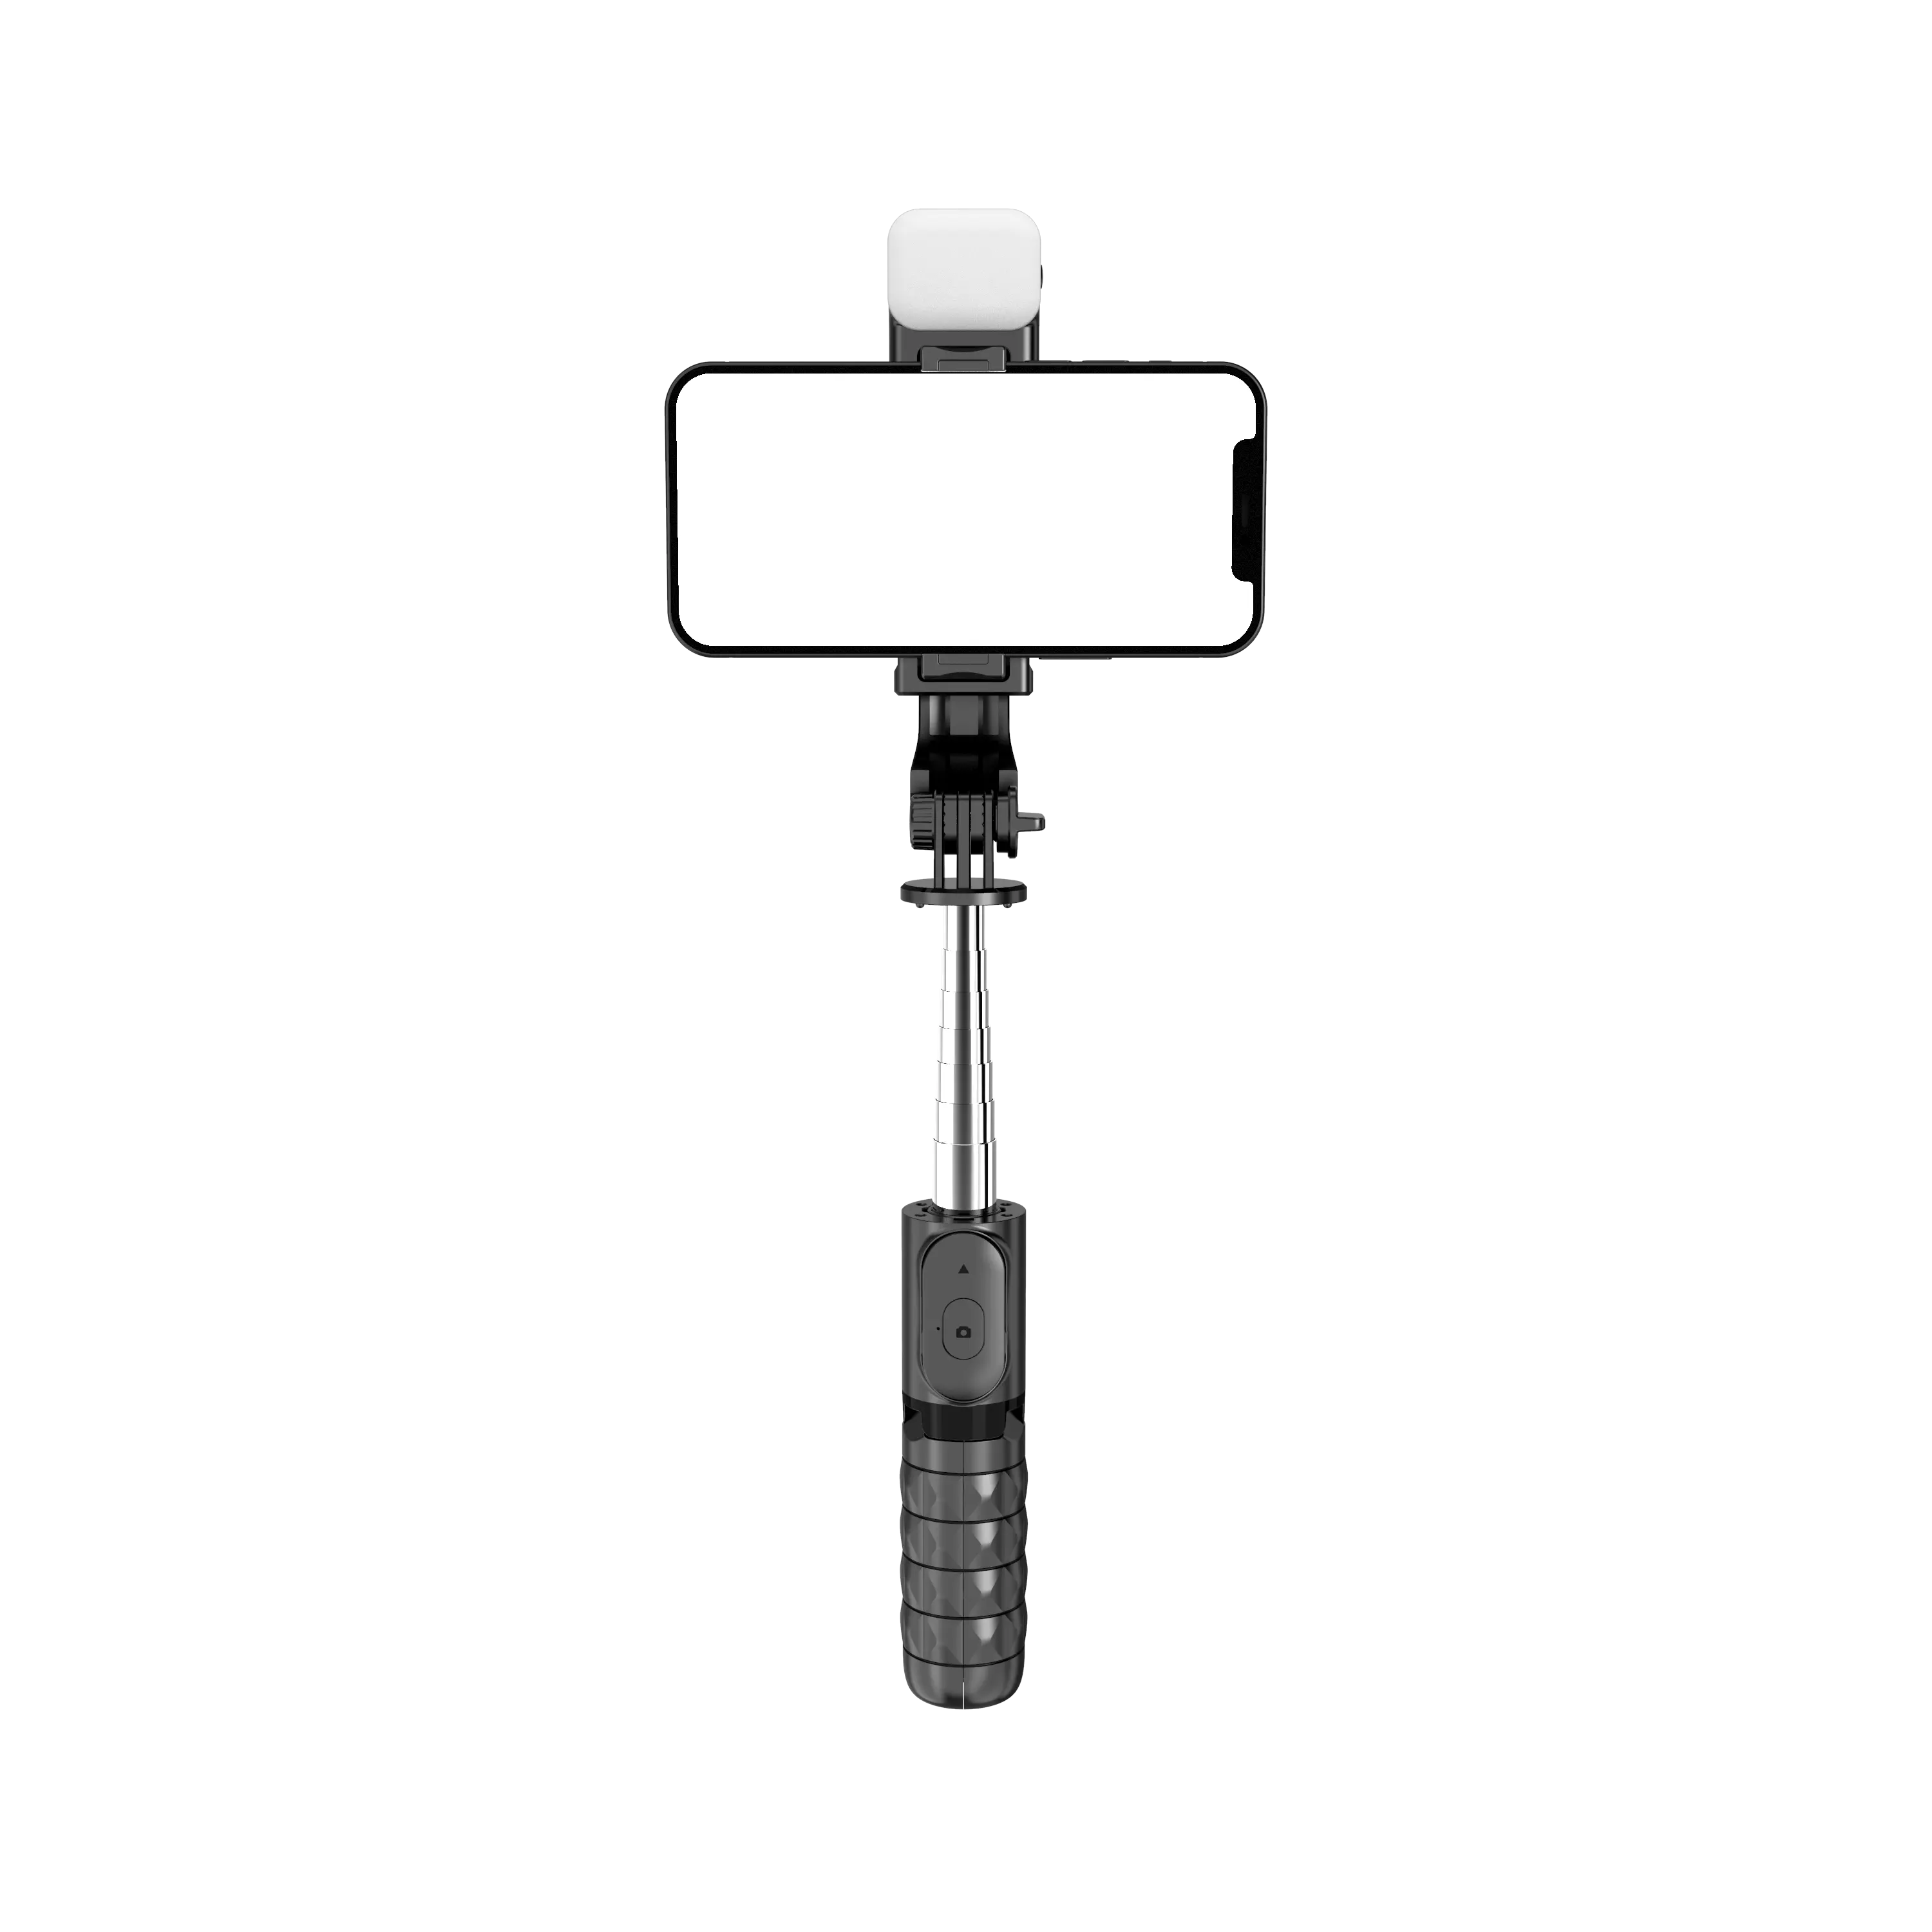 Mini selfie vara tripé LED preenchimento luz dobrável portátil tripé destacável controle remoto sem fio cardan estável